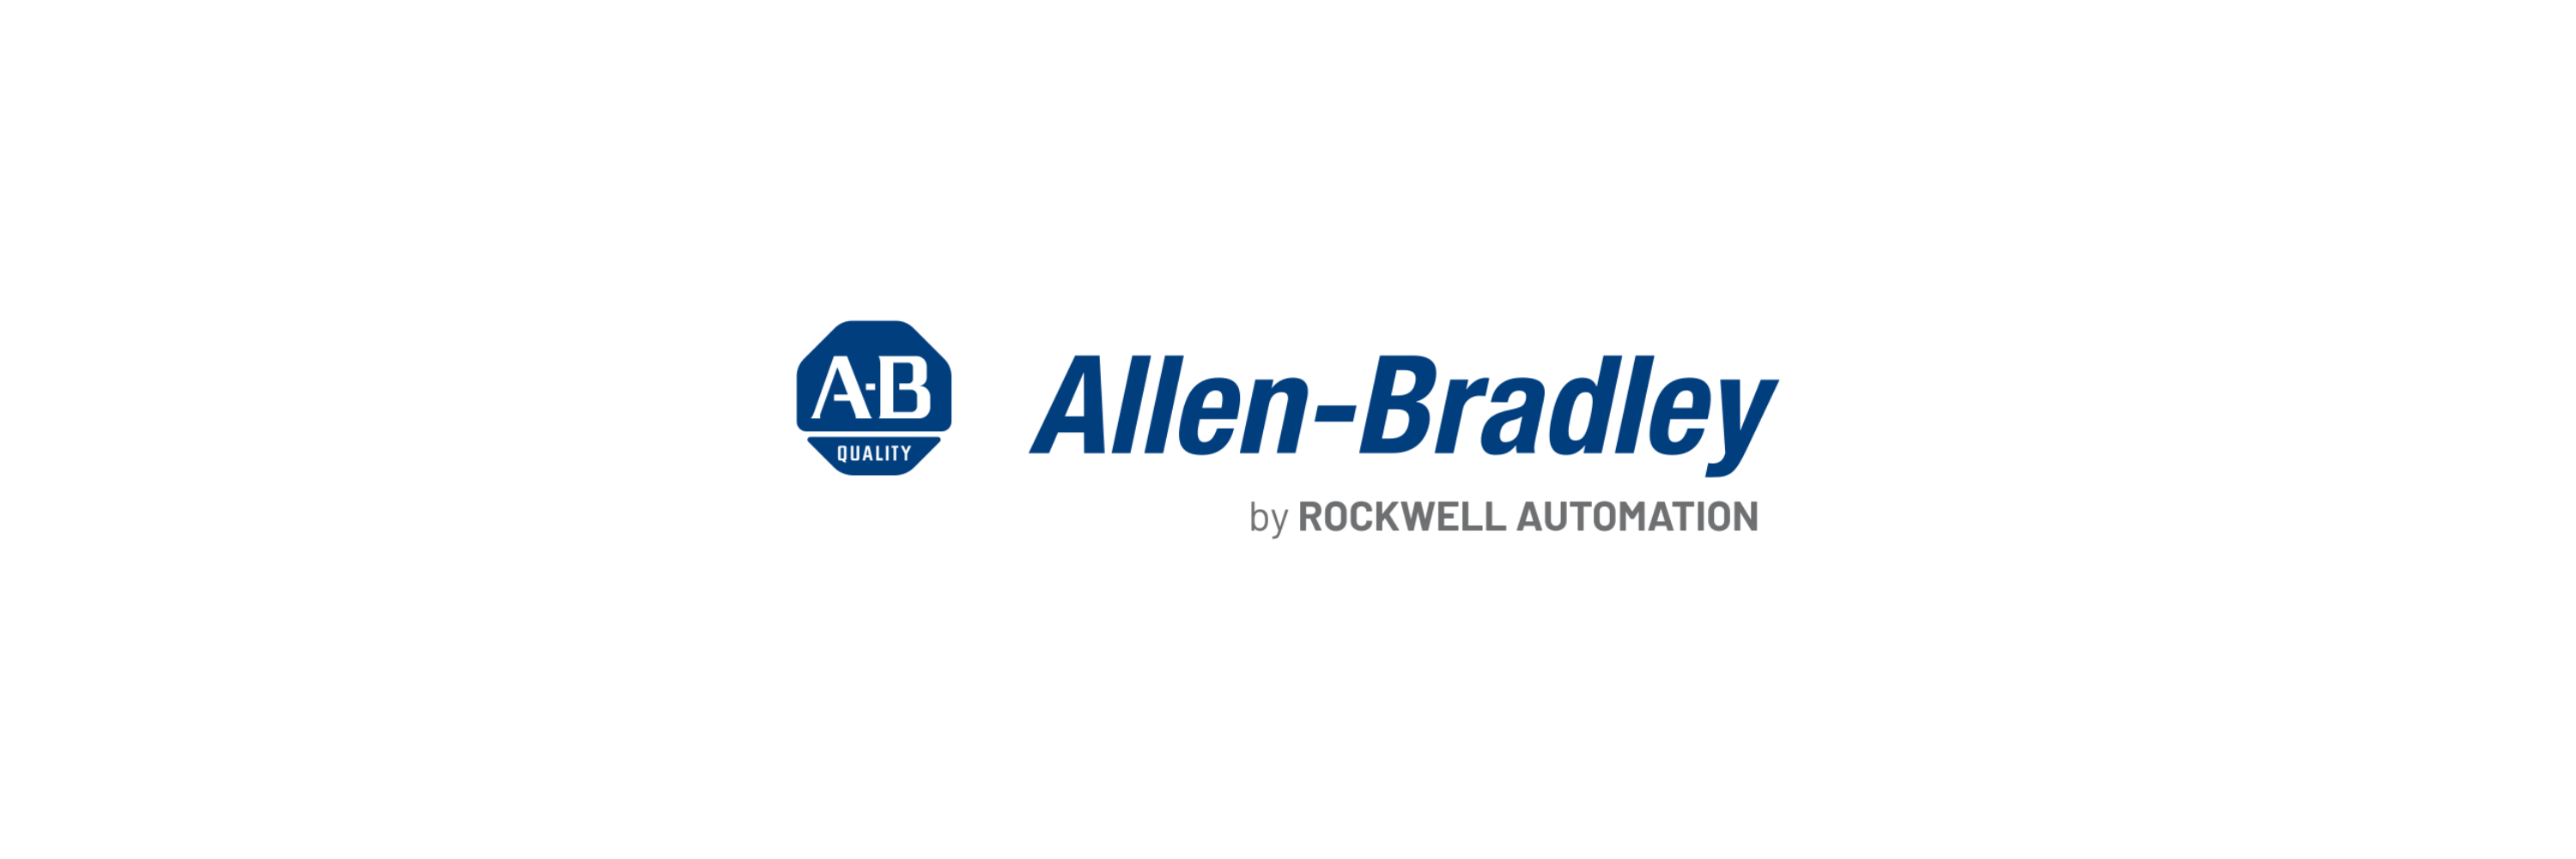 Allen-Bradley / Rockwell Automation - Klenk Maschinenhandel